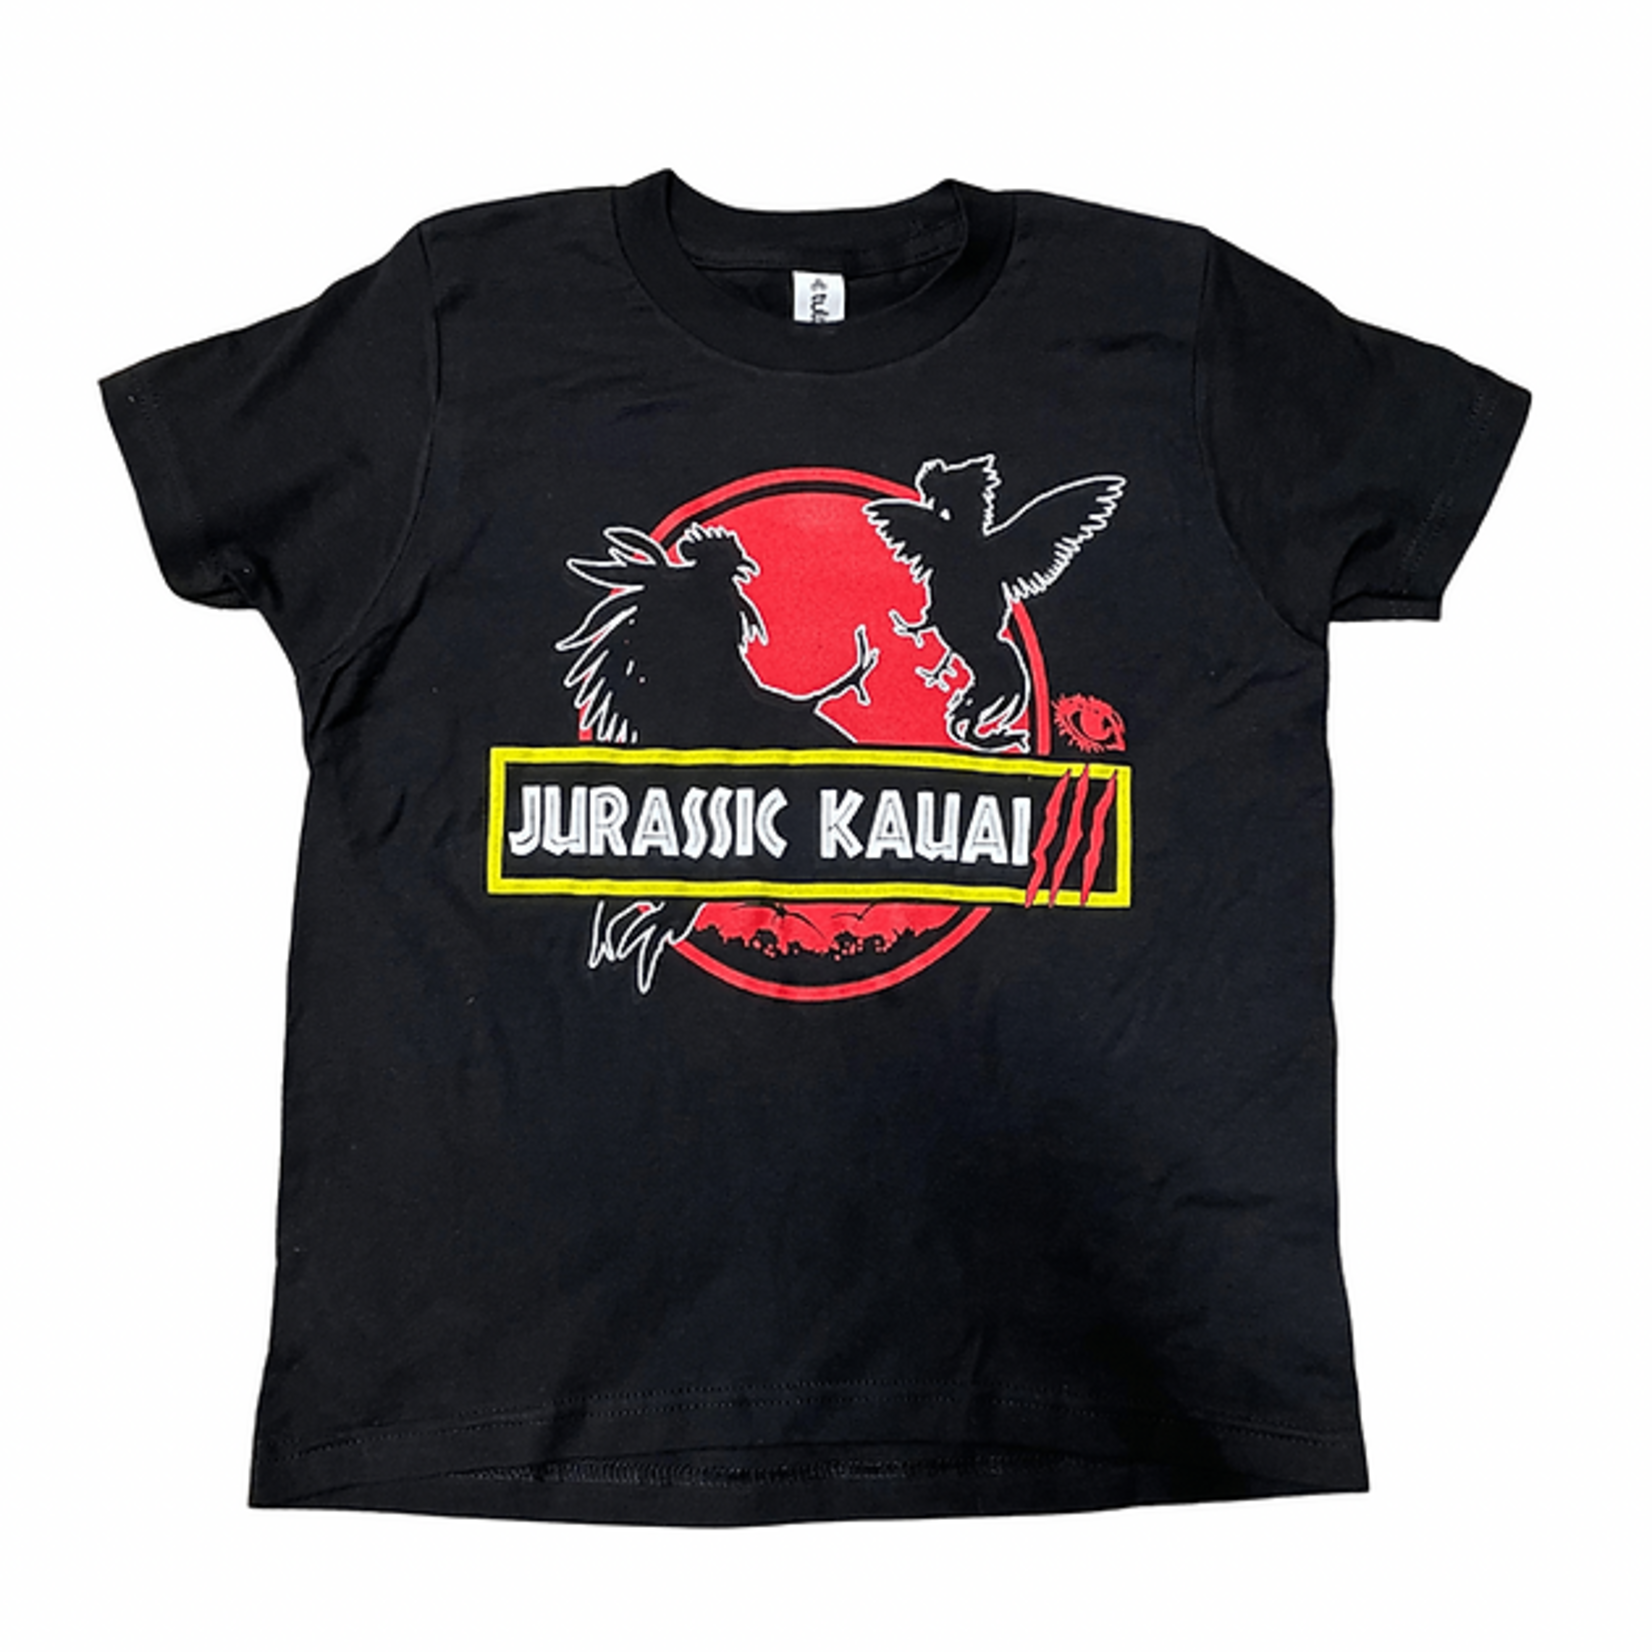 All Red Eye Clothing Toddler Jurassic Kauai T-shirt